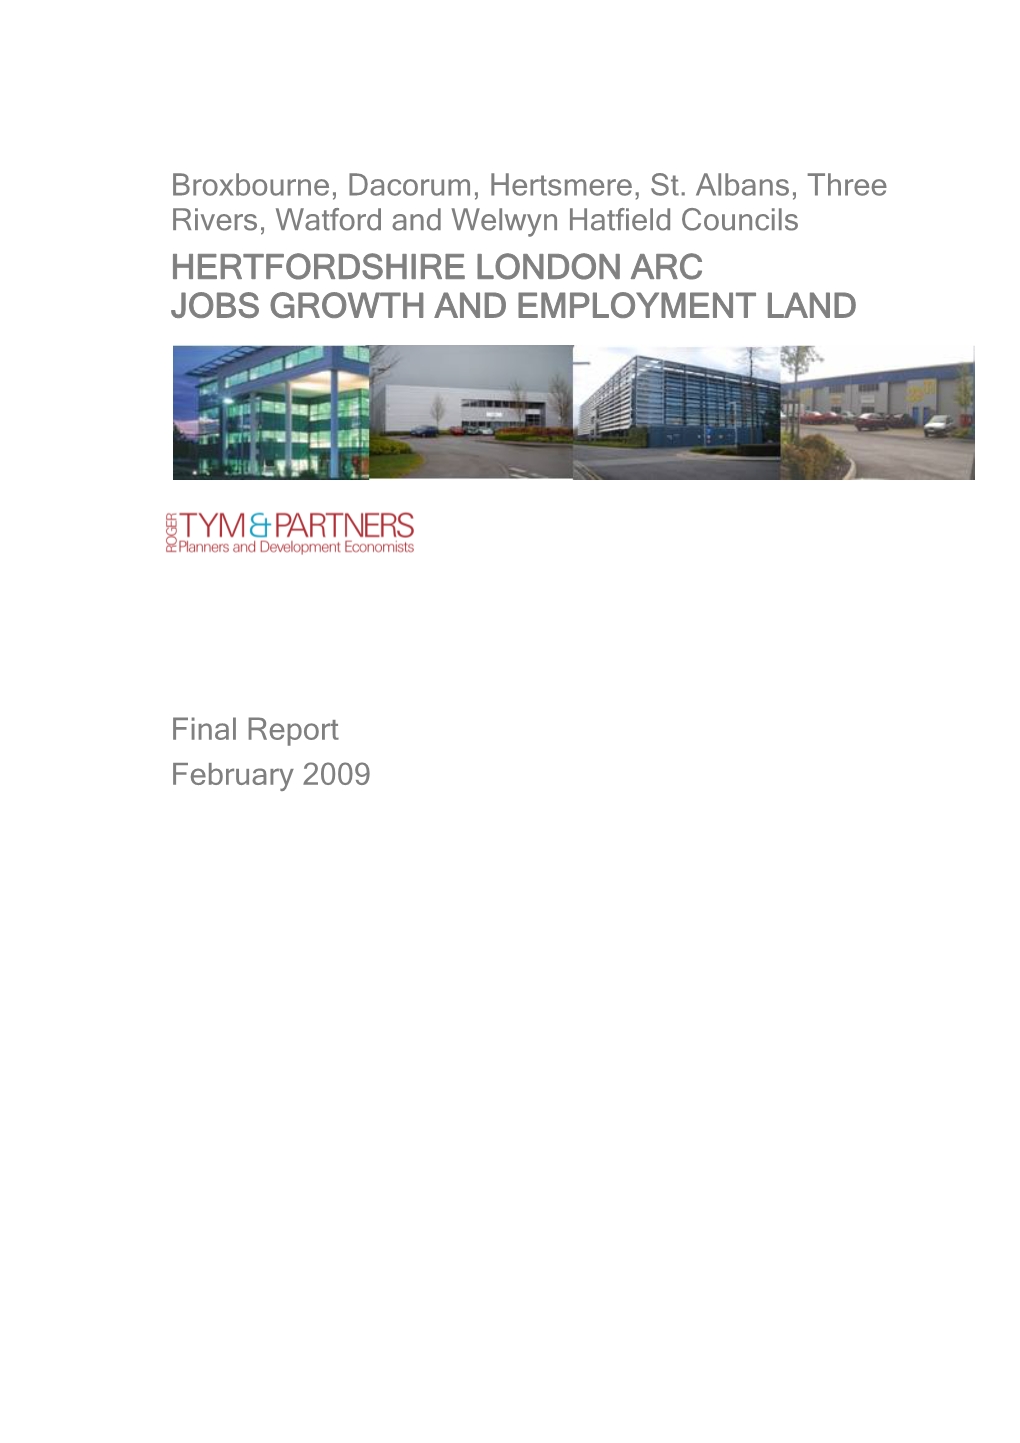 Hertfordshire London Arc Jobs Growth and Employment Land (2008)